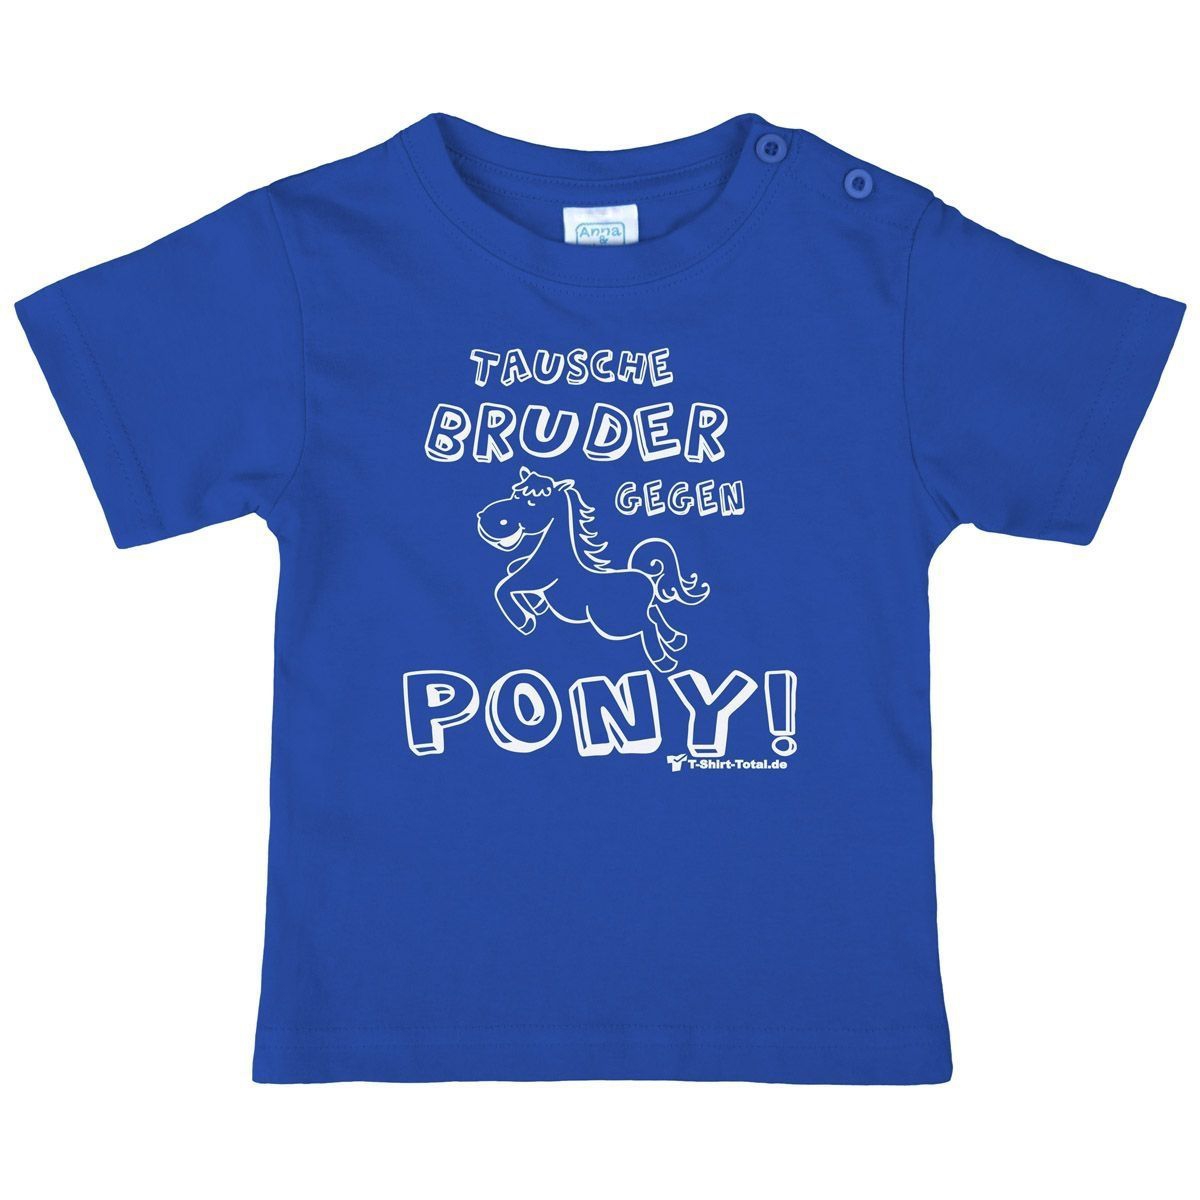 Tausche Bruder gegen Pony Kinder T-Shirt royal 80 / 86